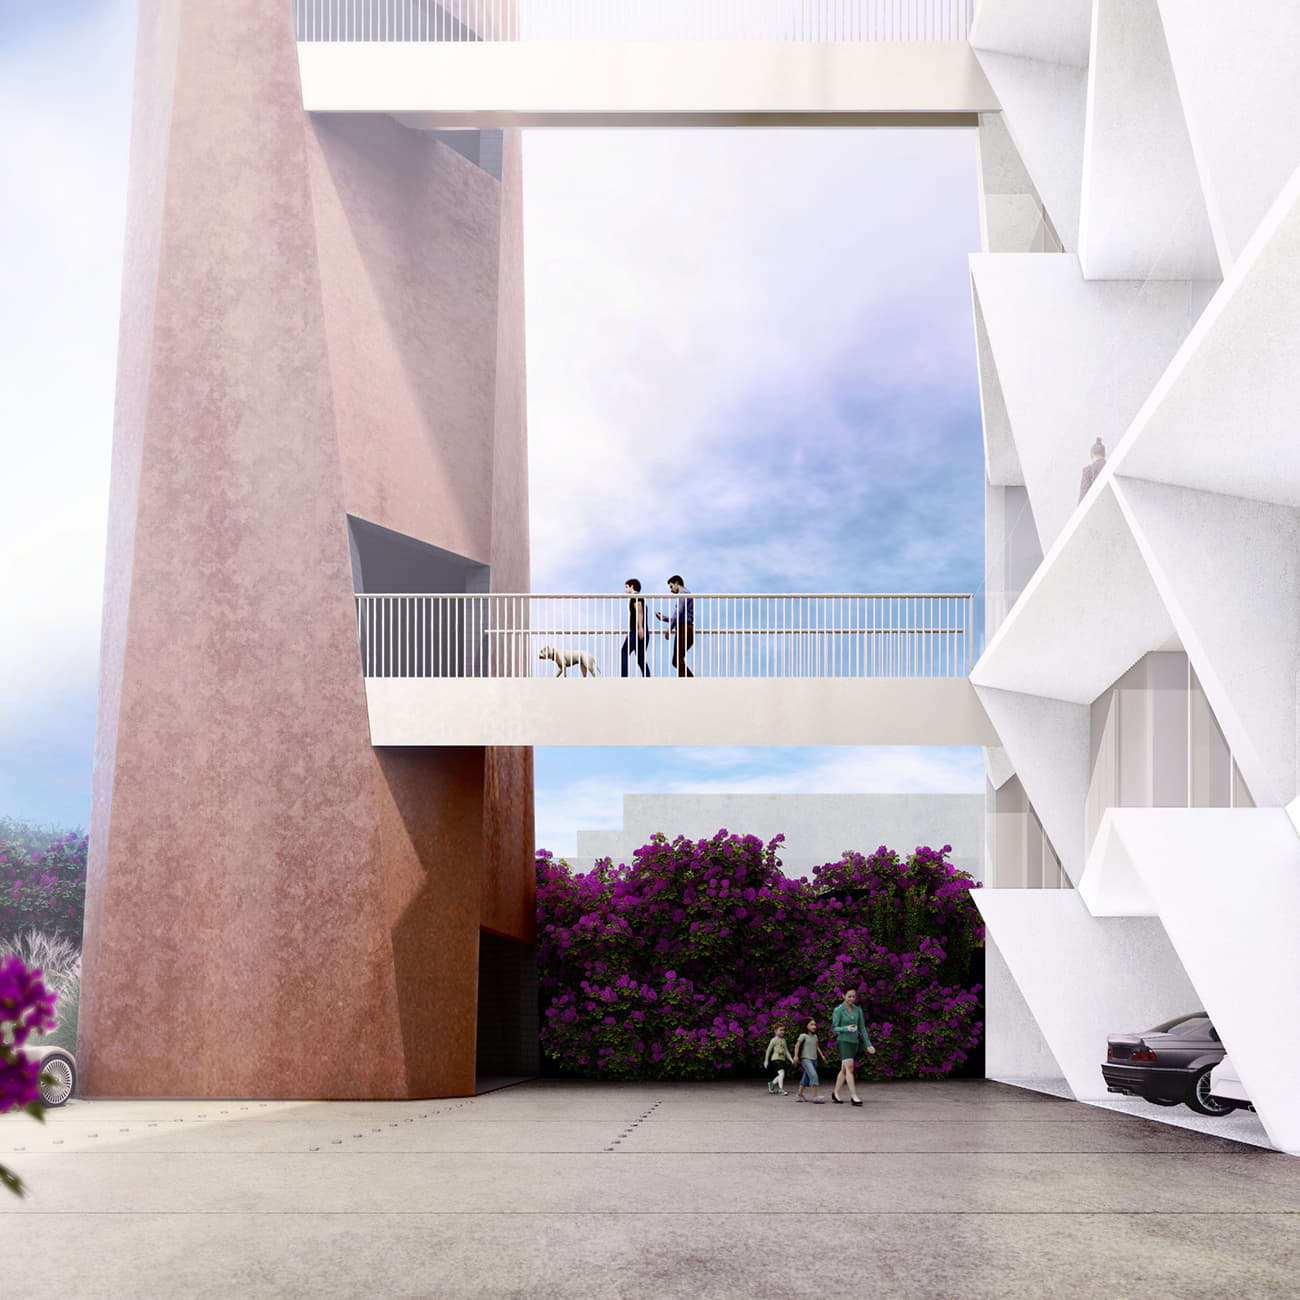 7-departamentos-alveare-multifamiliar-vertical-arquidromo-arquitectos-monterrey-mexico.jpg